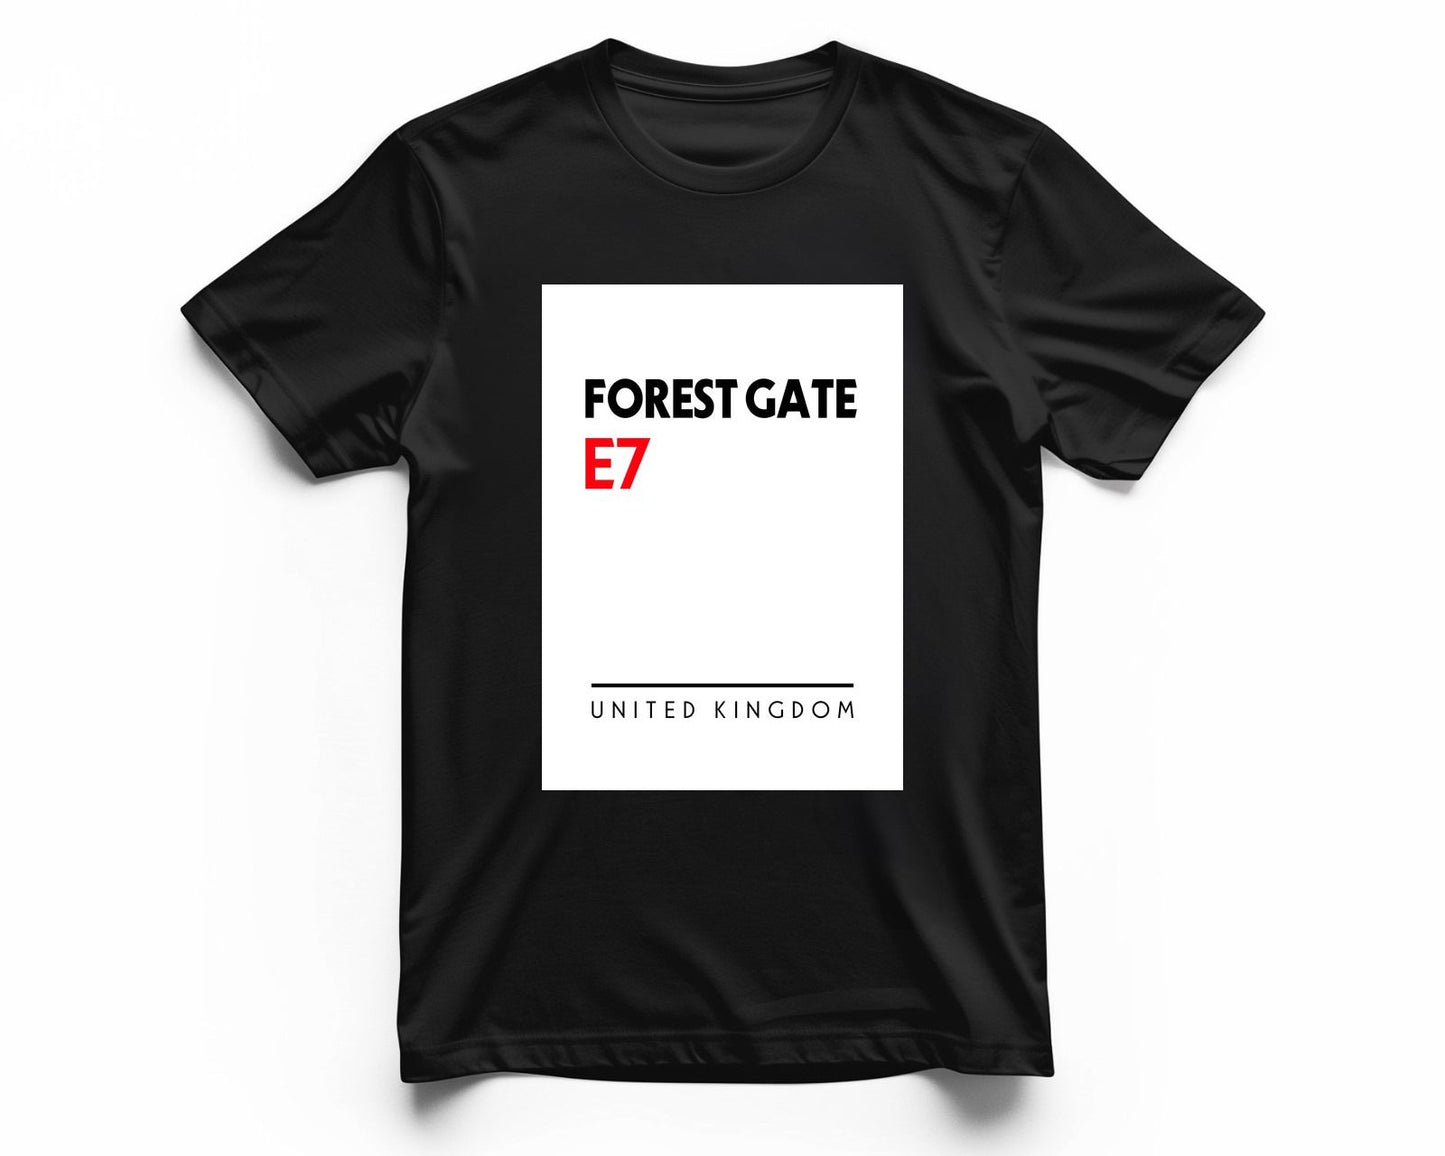 Forest Gate E7 Postal Code - @VickyHanggara